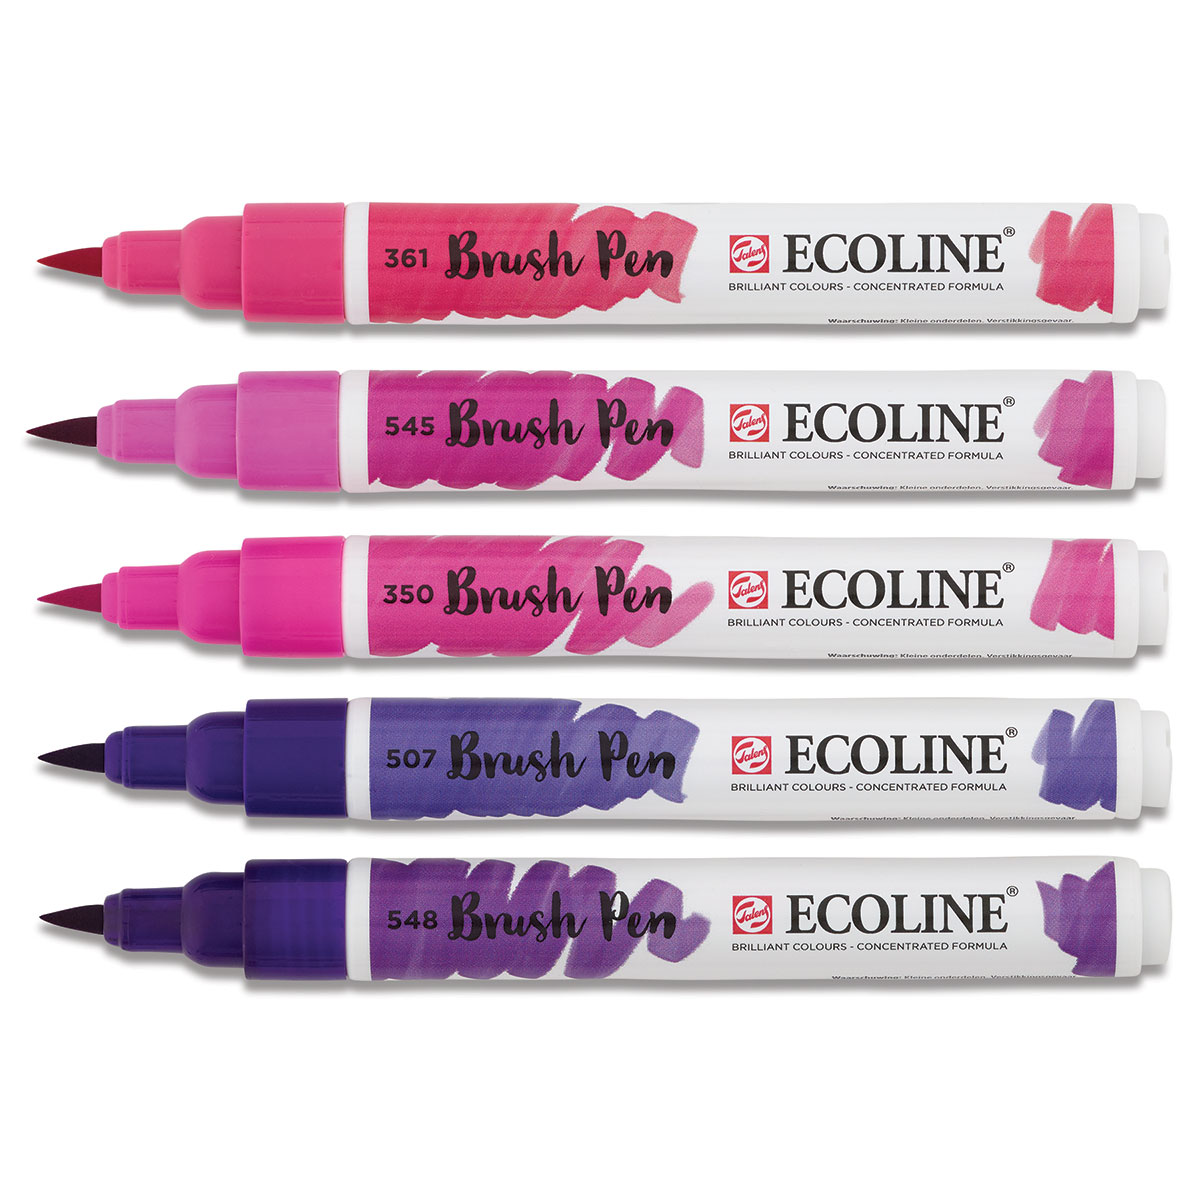 Talens Ecoline Brush Pen 5 set, Primary Colors